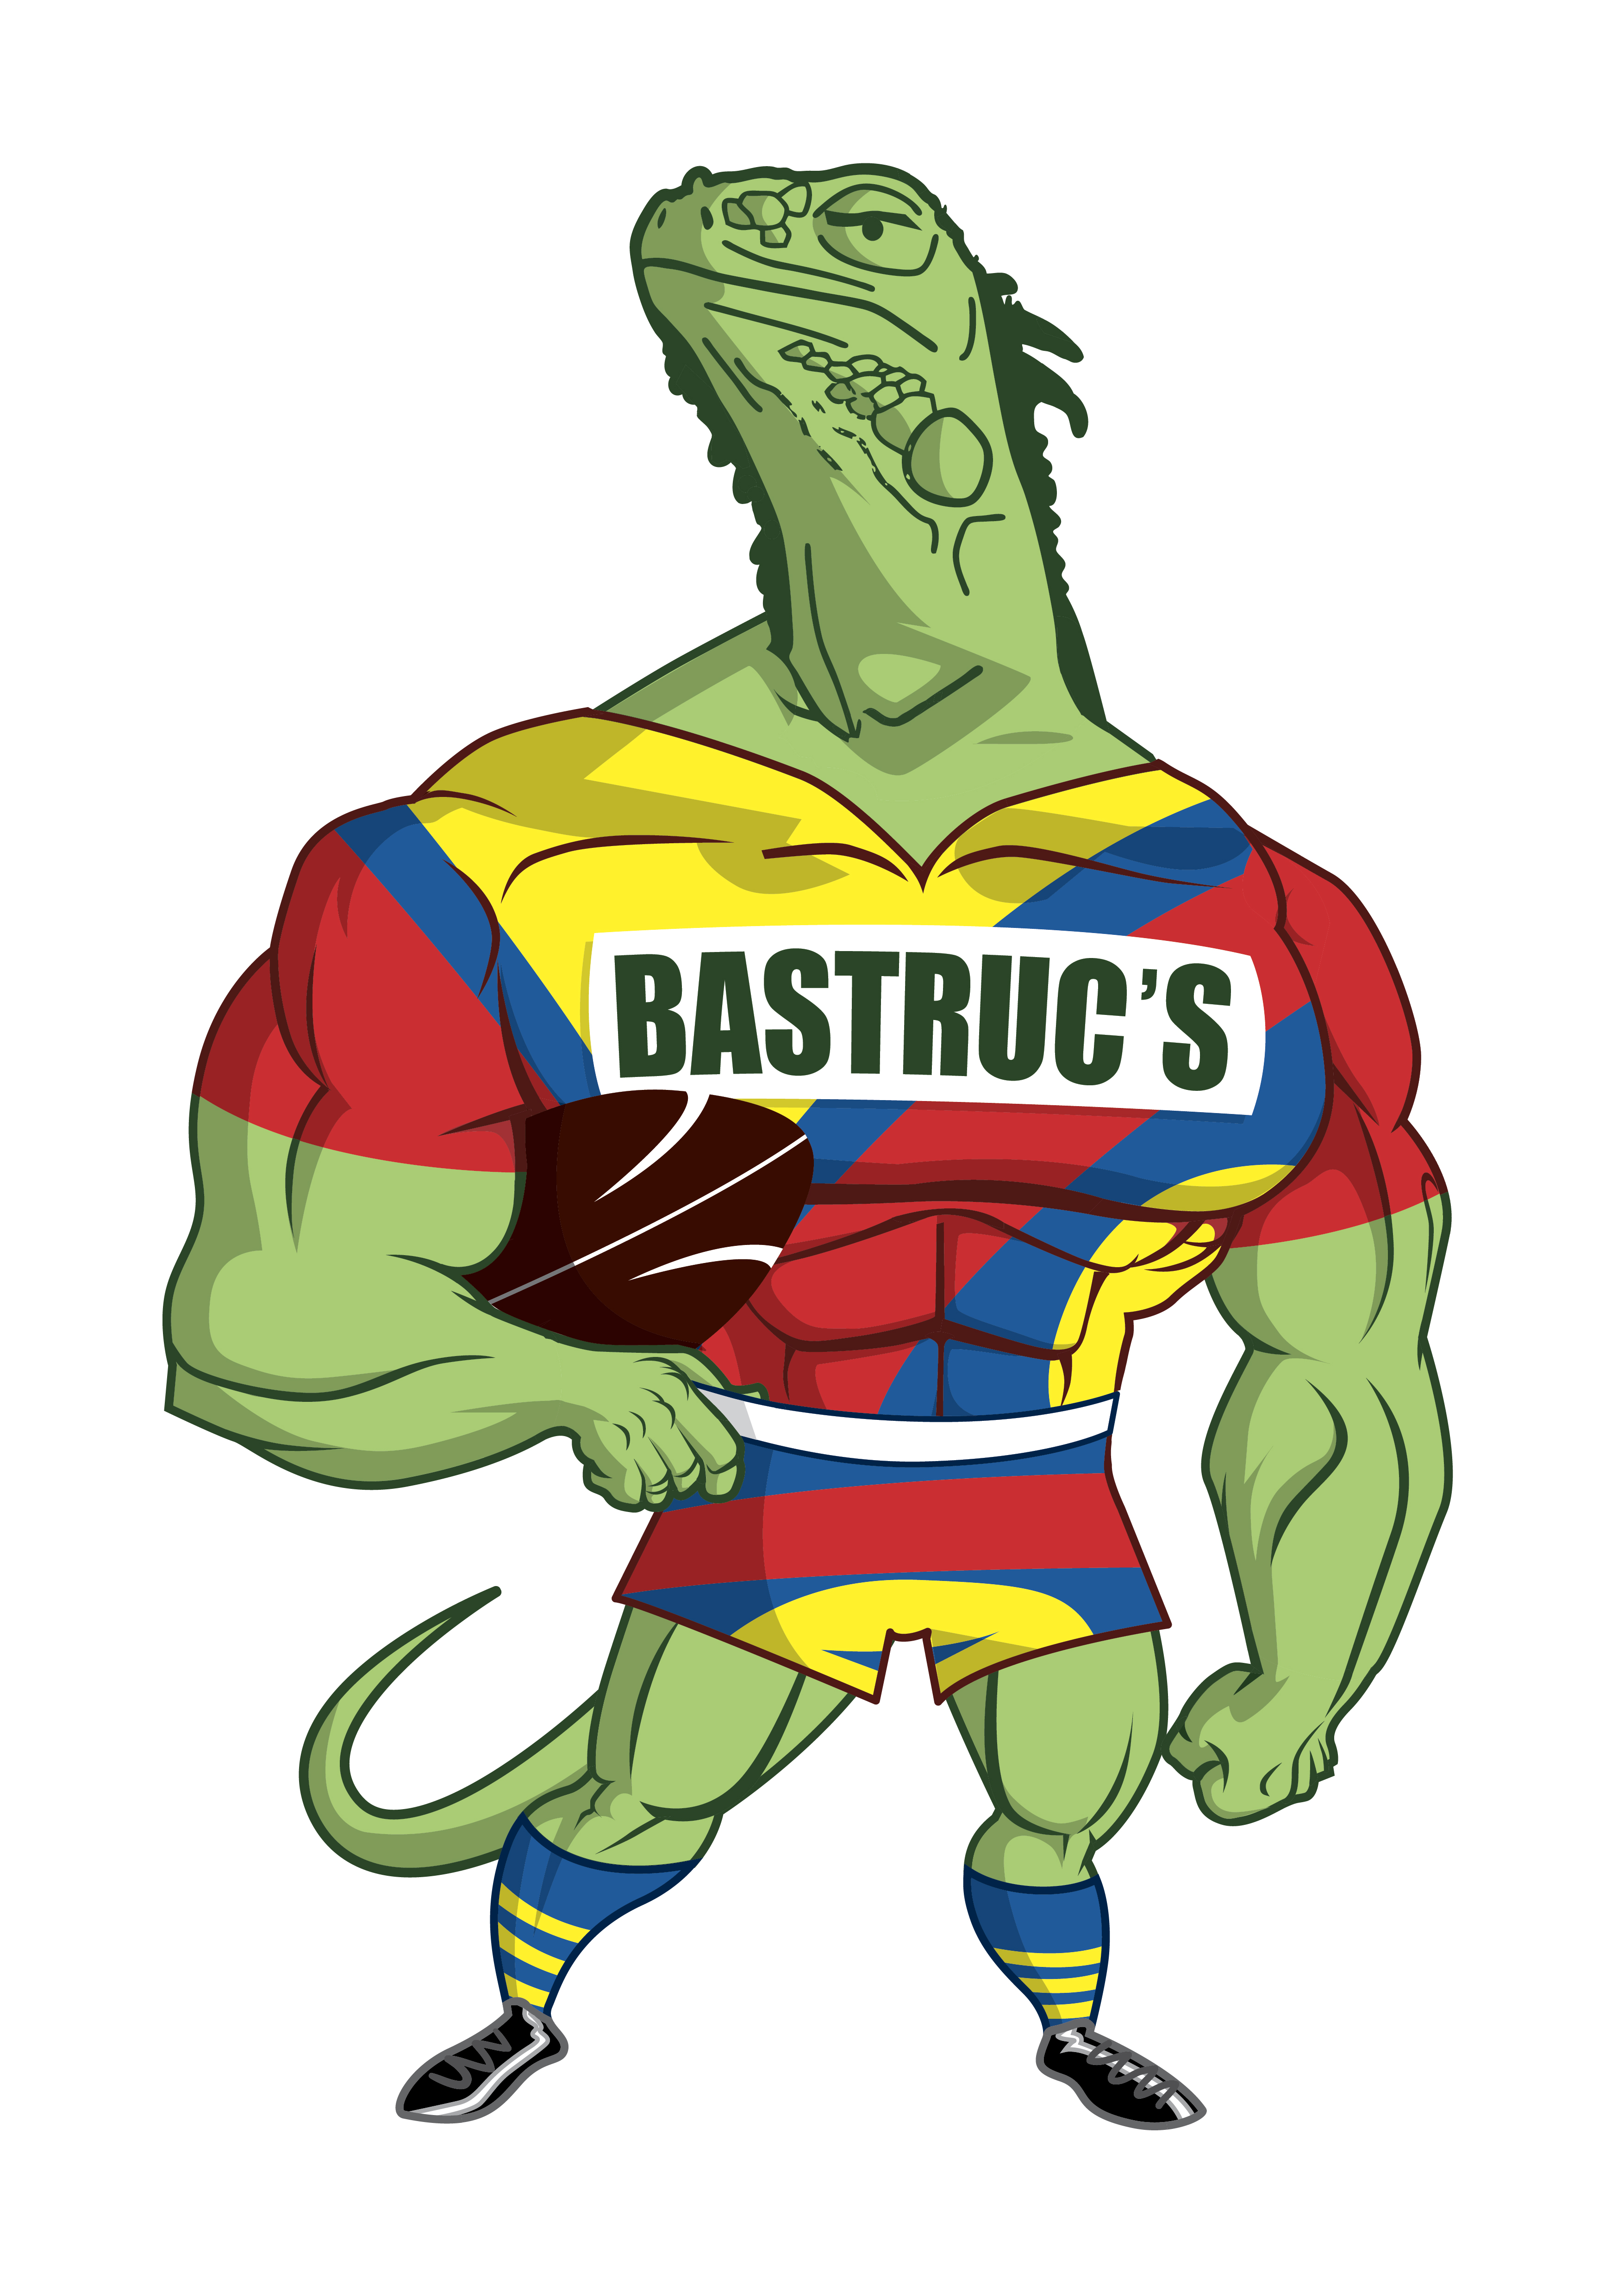 bastruc-s-logo-620b8529244d8276811483.jpg